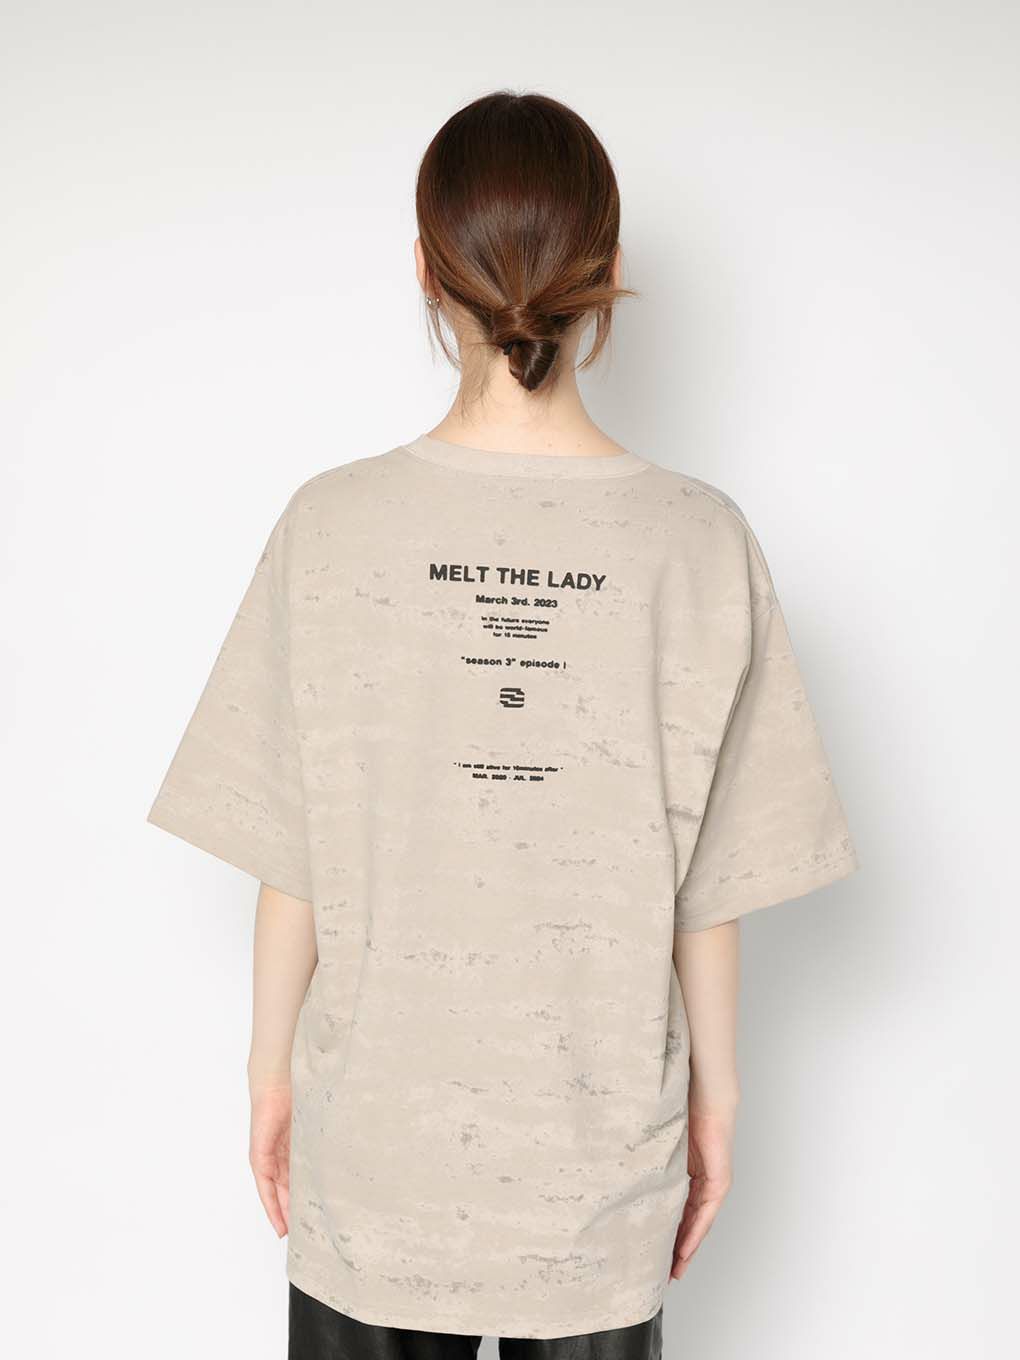 S3 slogan T-shirt